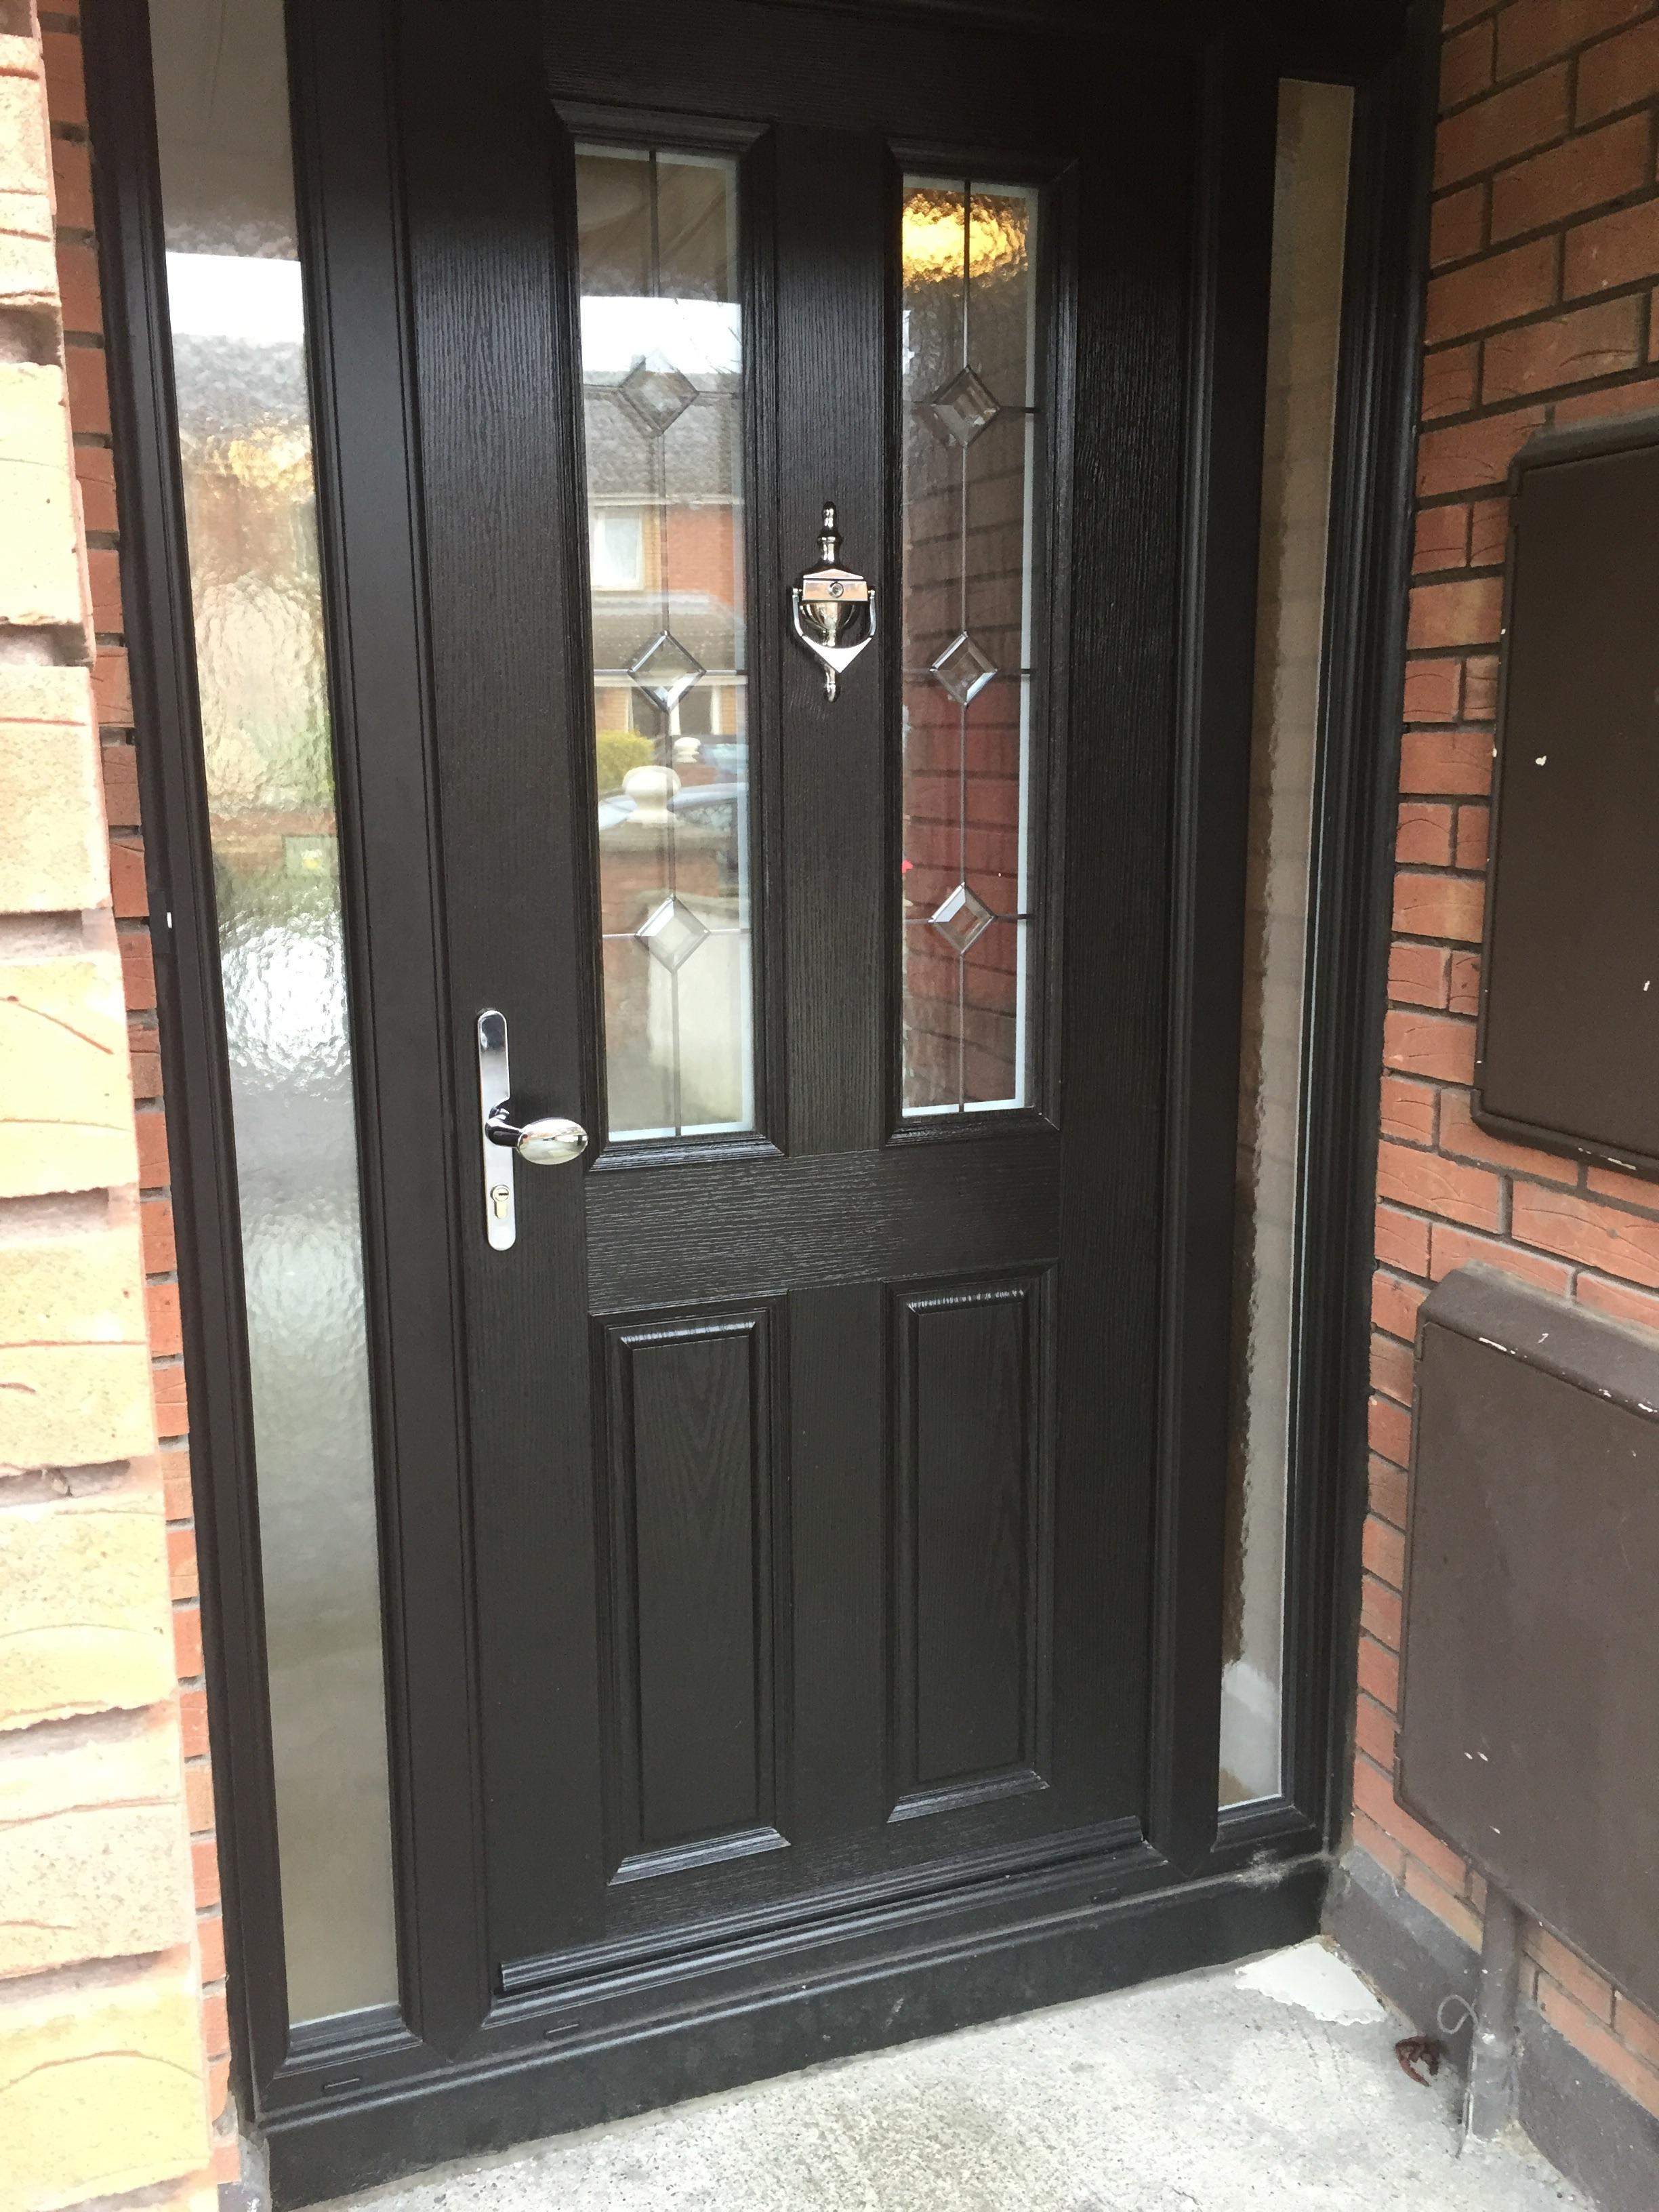 BLACK APEER APM2 COMPOSITE DOOR FITTED BY ASGARD WINDOWS IN DUBLIN.